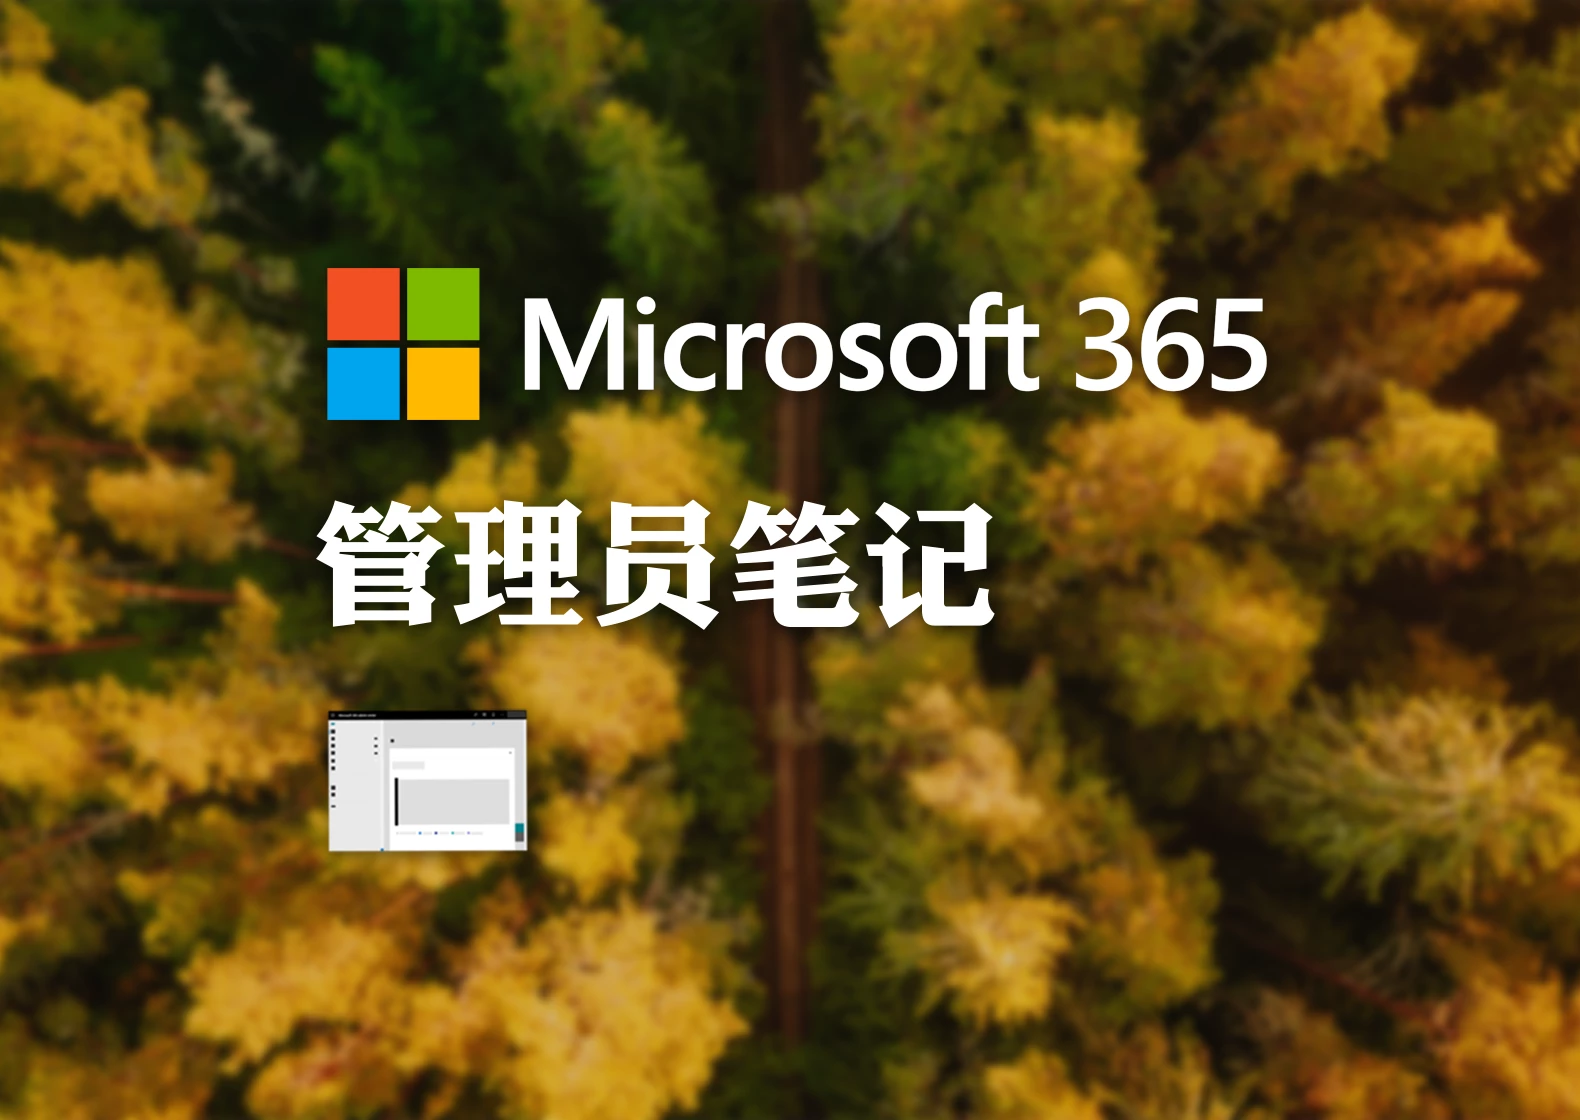 Office 365 / Microsoft 365 管理员笔记